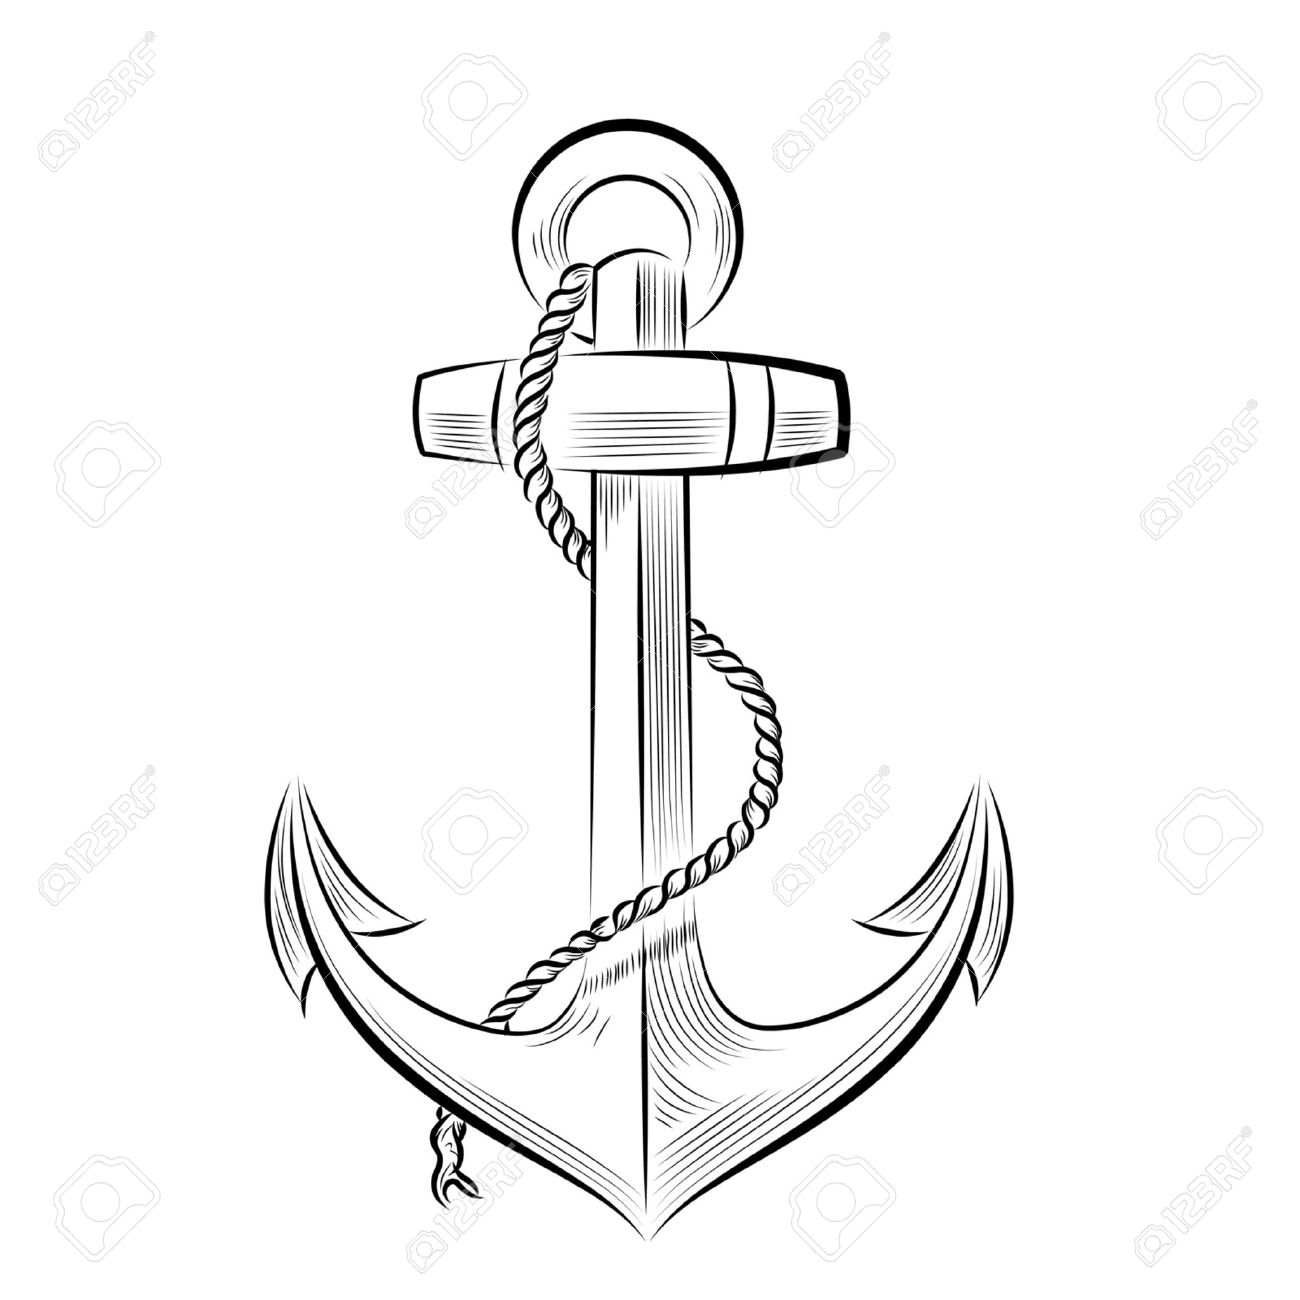 anchor clipart easy